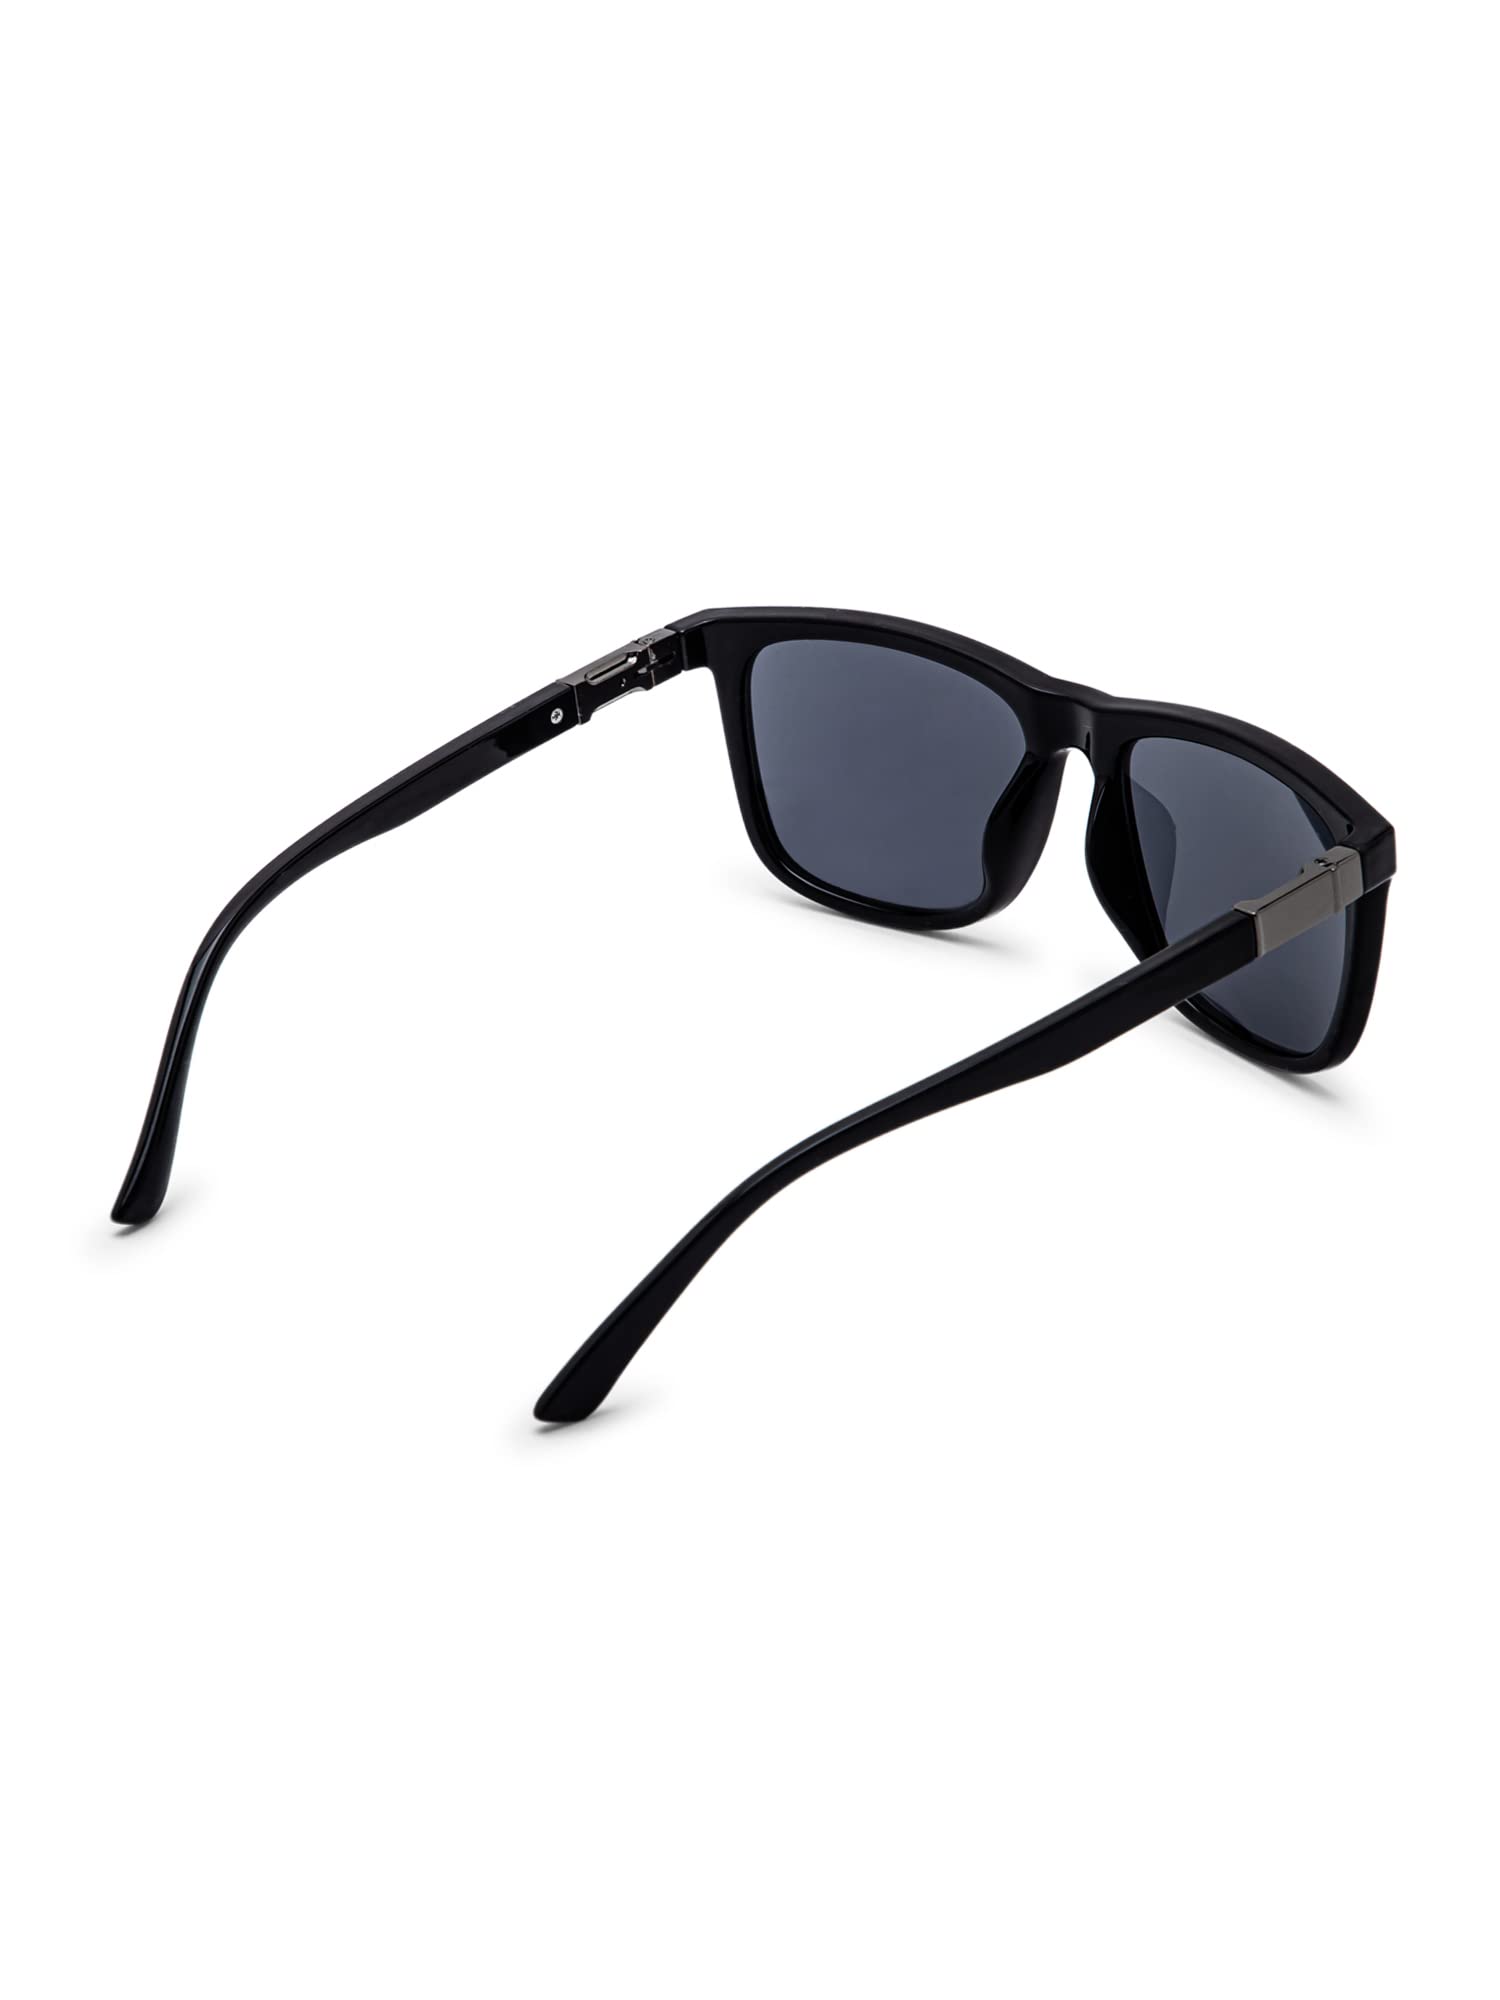 Adult Hiking Polarized Sunglasses Cat 3 MH530 Black/Blue